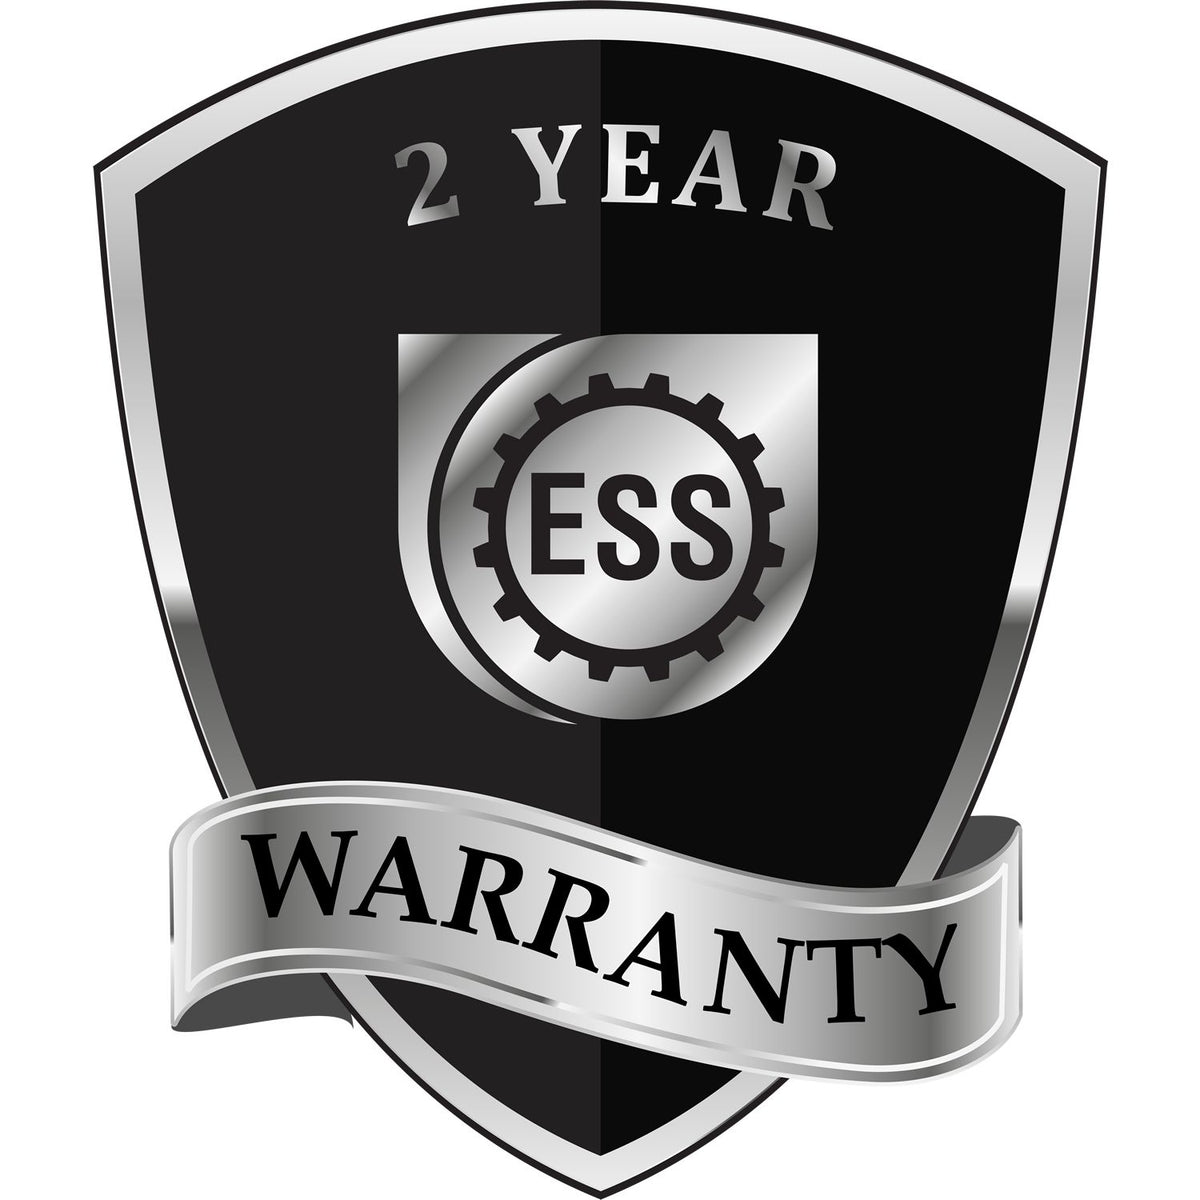 A black and silver badge or emblem showing warranty information for the Hybrid New York Land Surveyor Seal